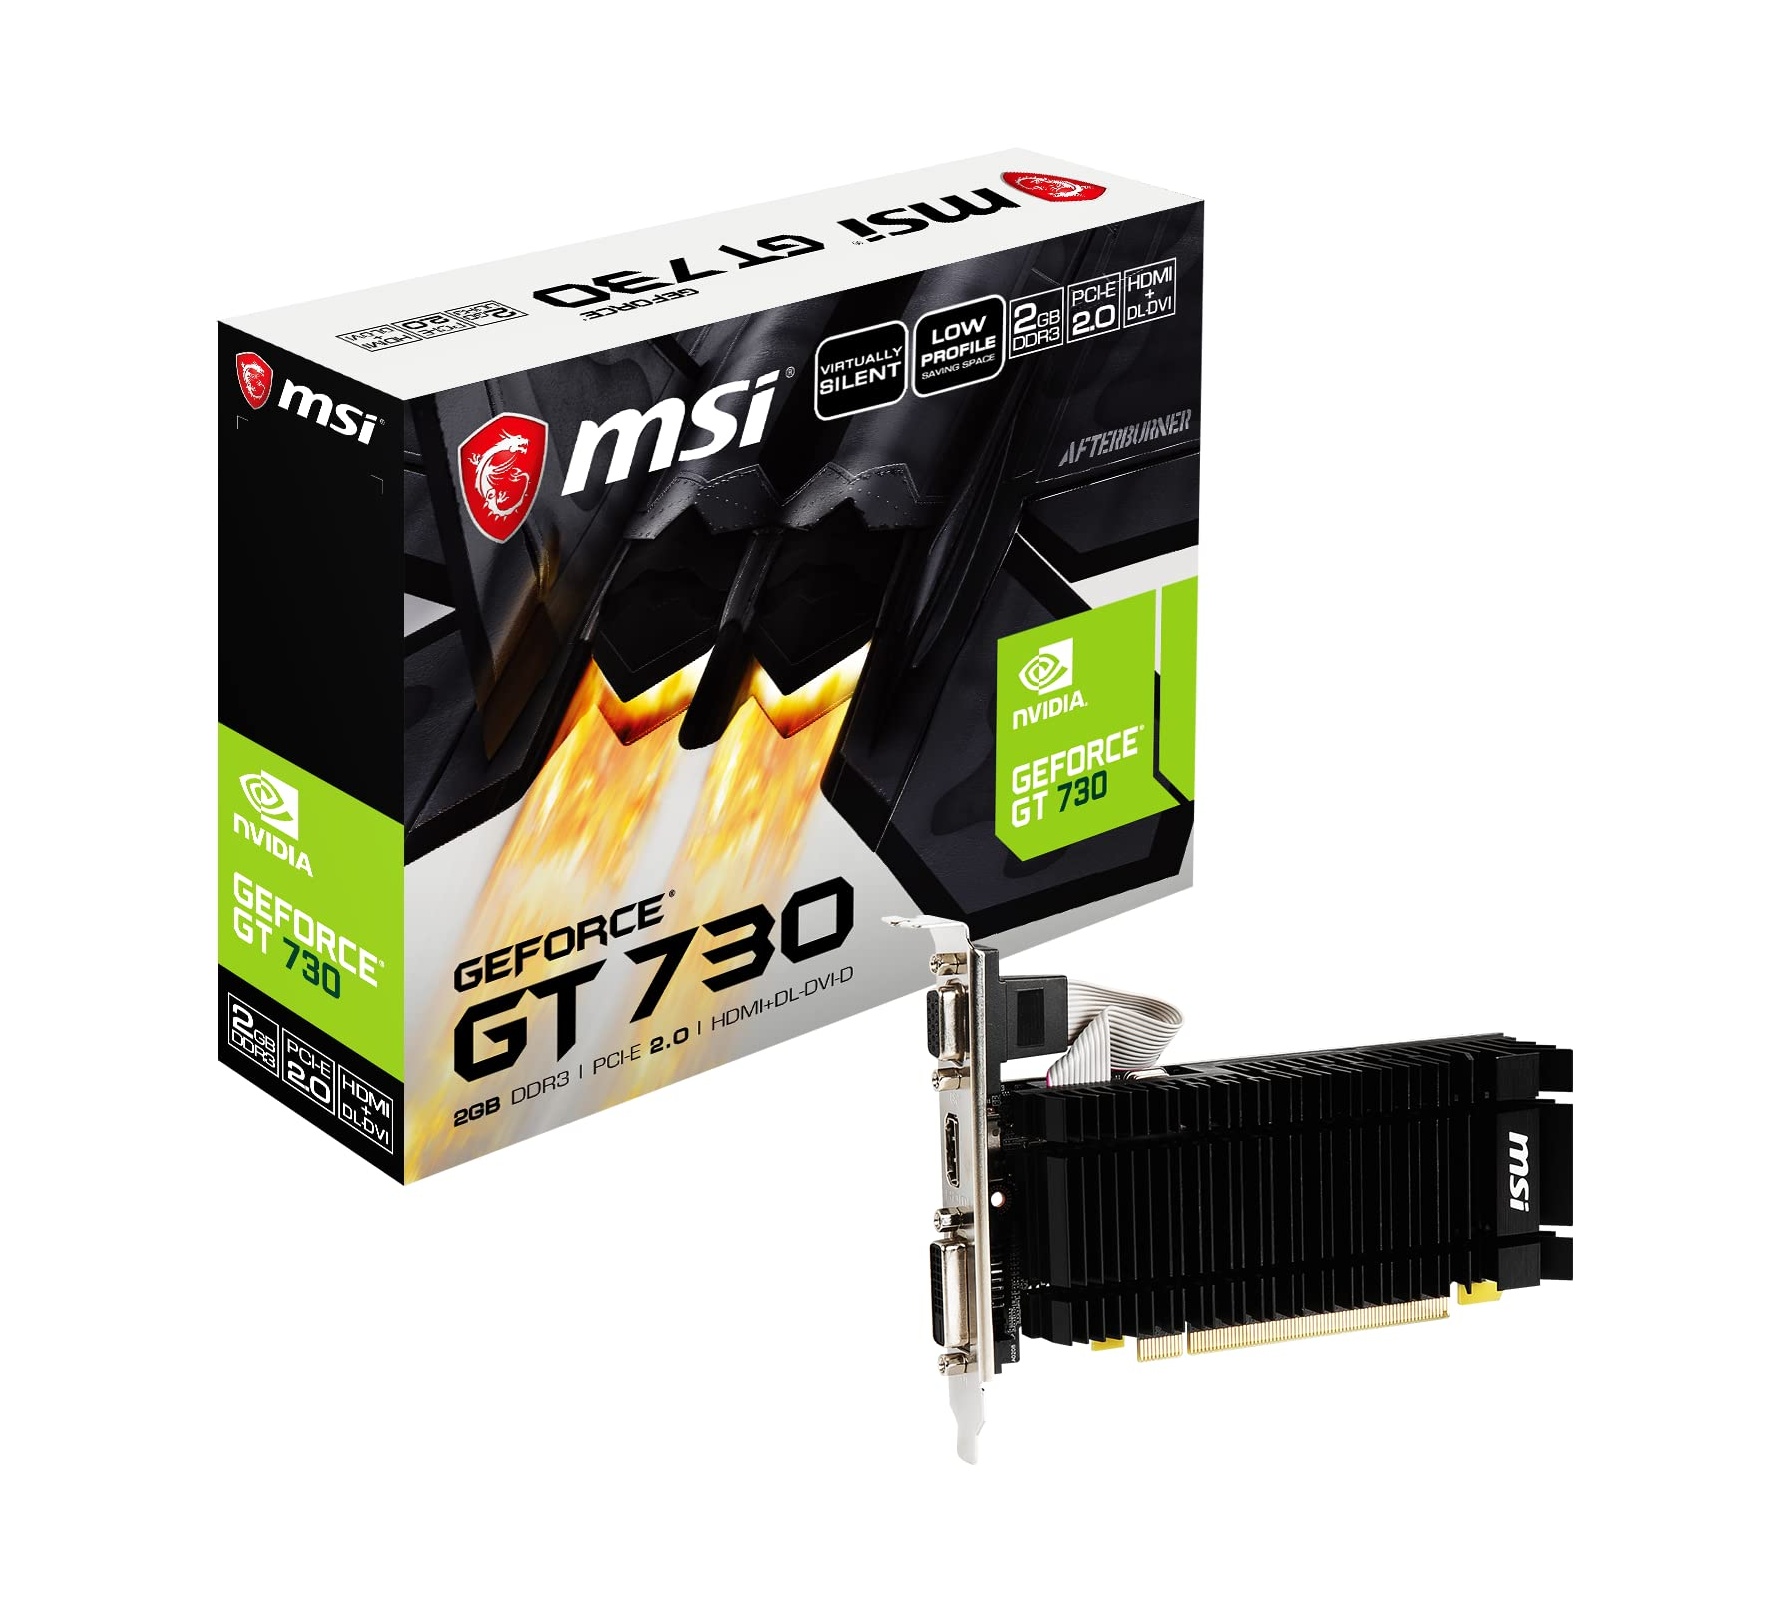 Bild GeForce GT 730 2 GB GDDR3 902 MHz V809-3861R